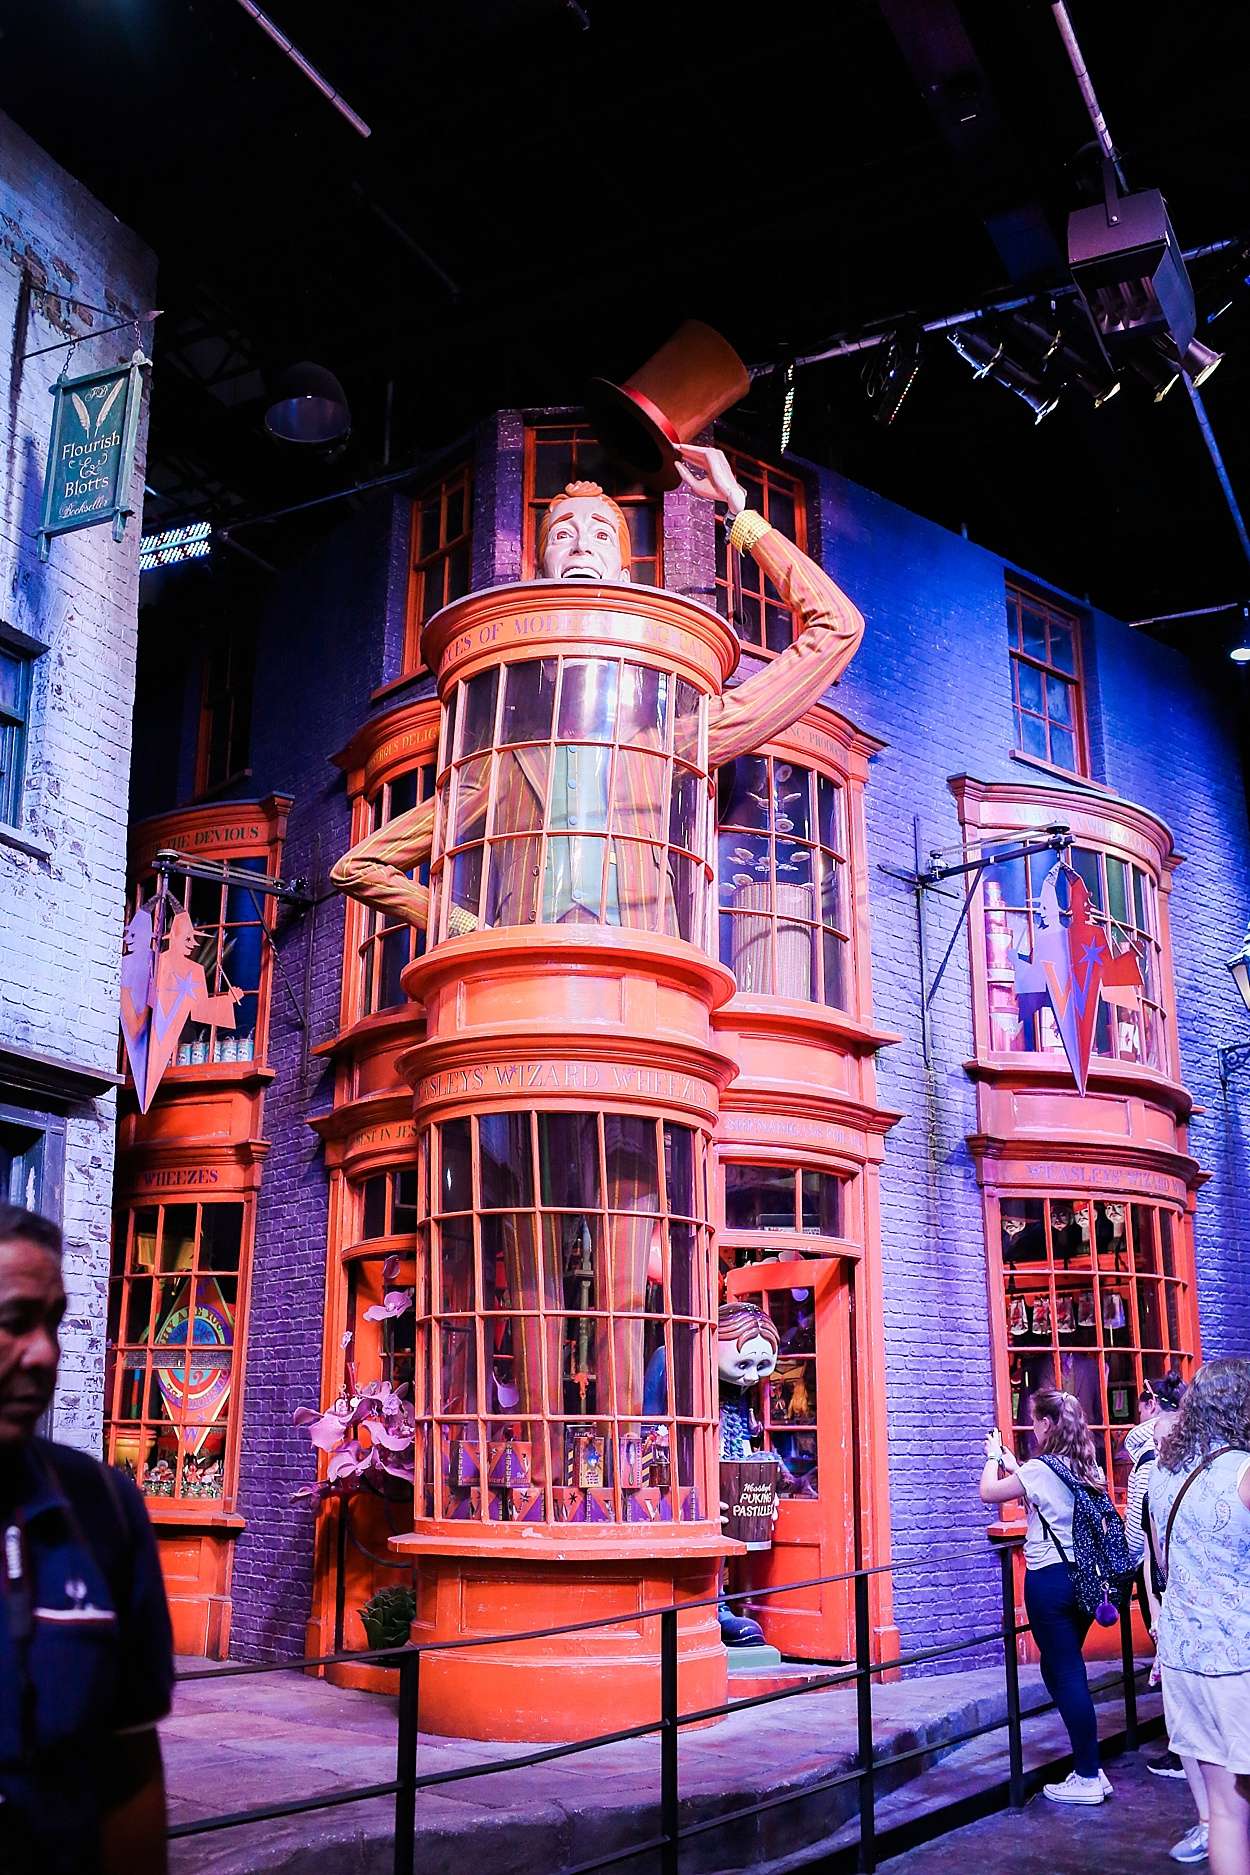 The Harry Potter studio tour!